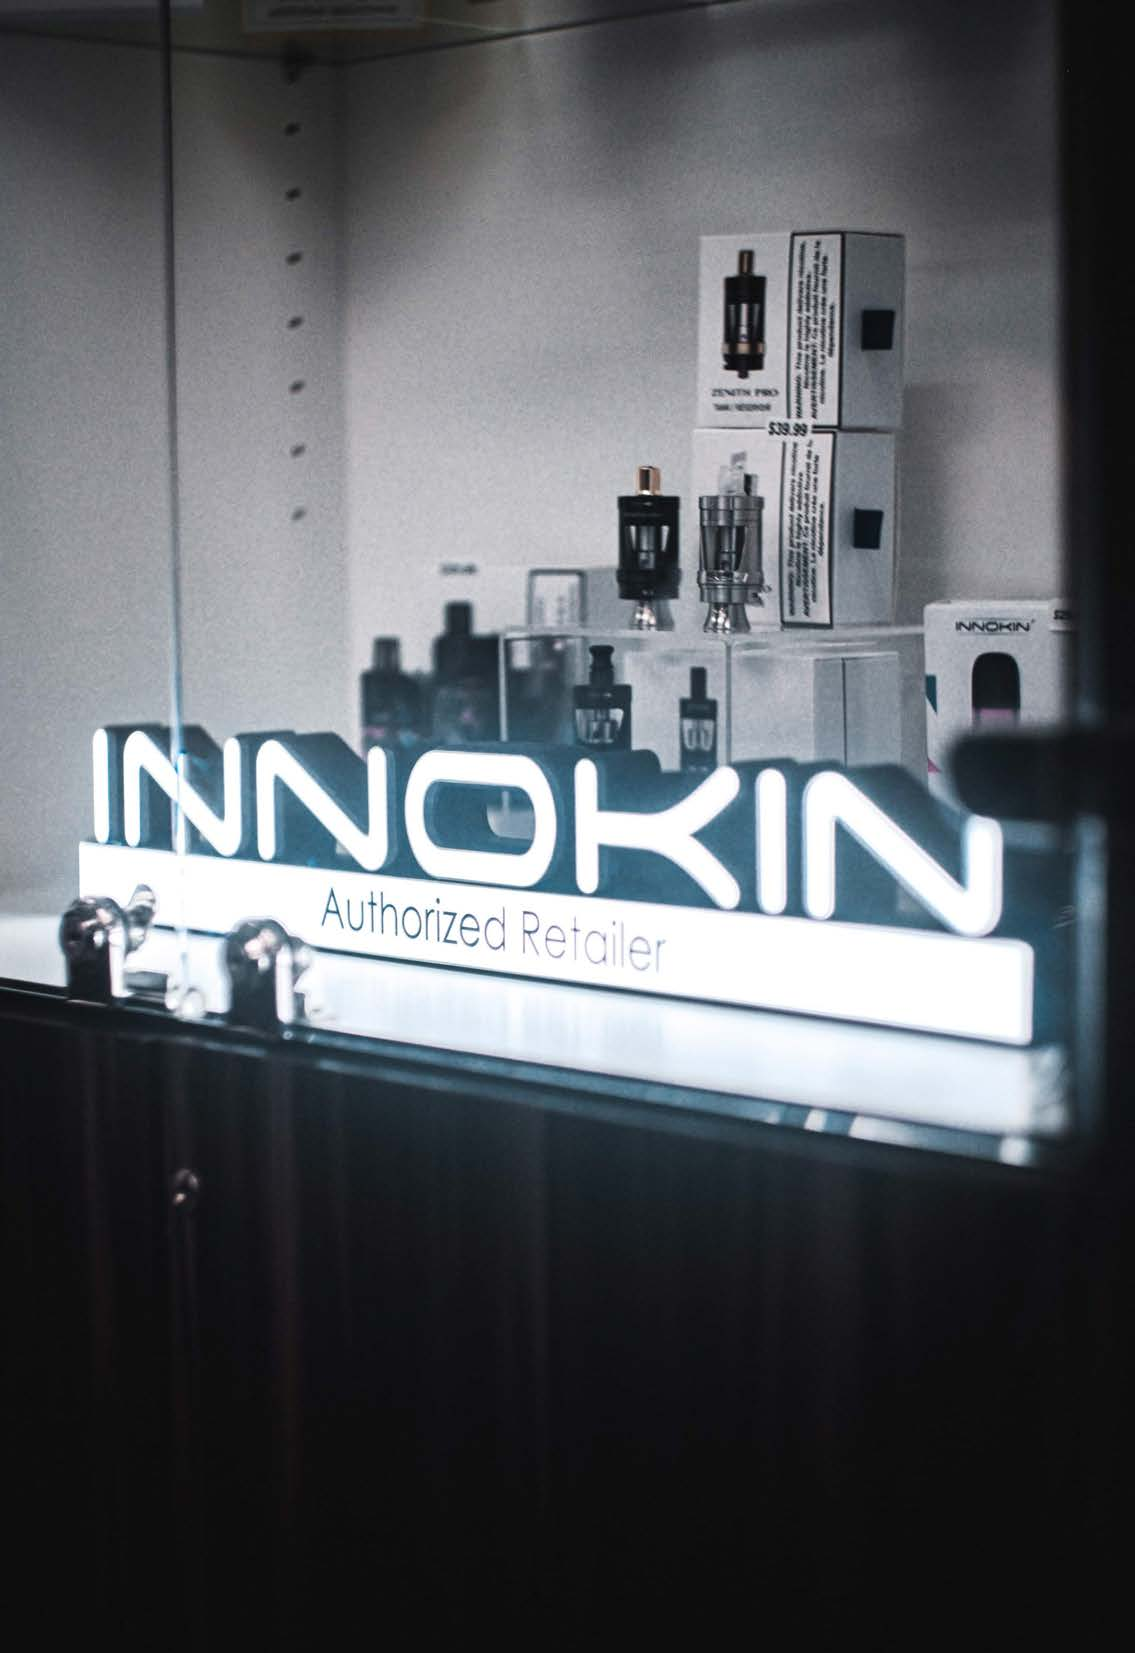 www.innokin.com